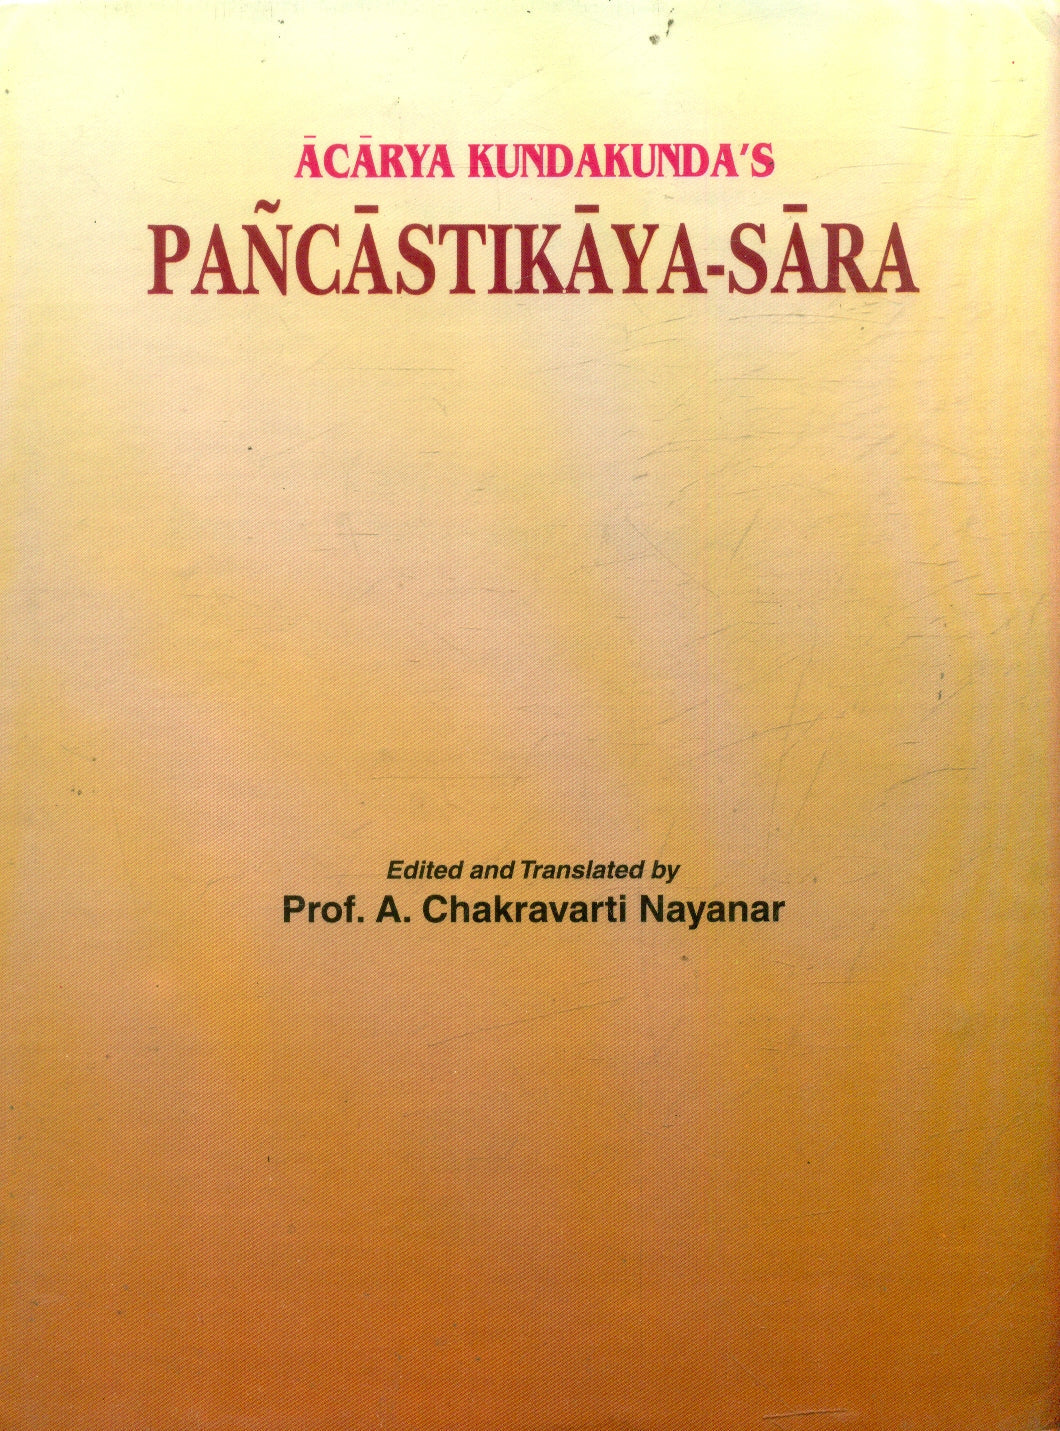 PancastikayaSara (English)